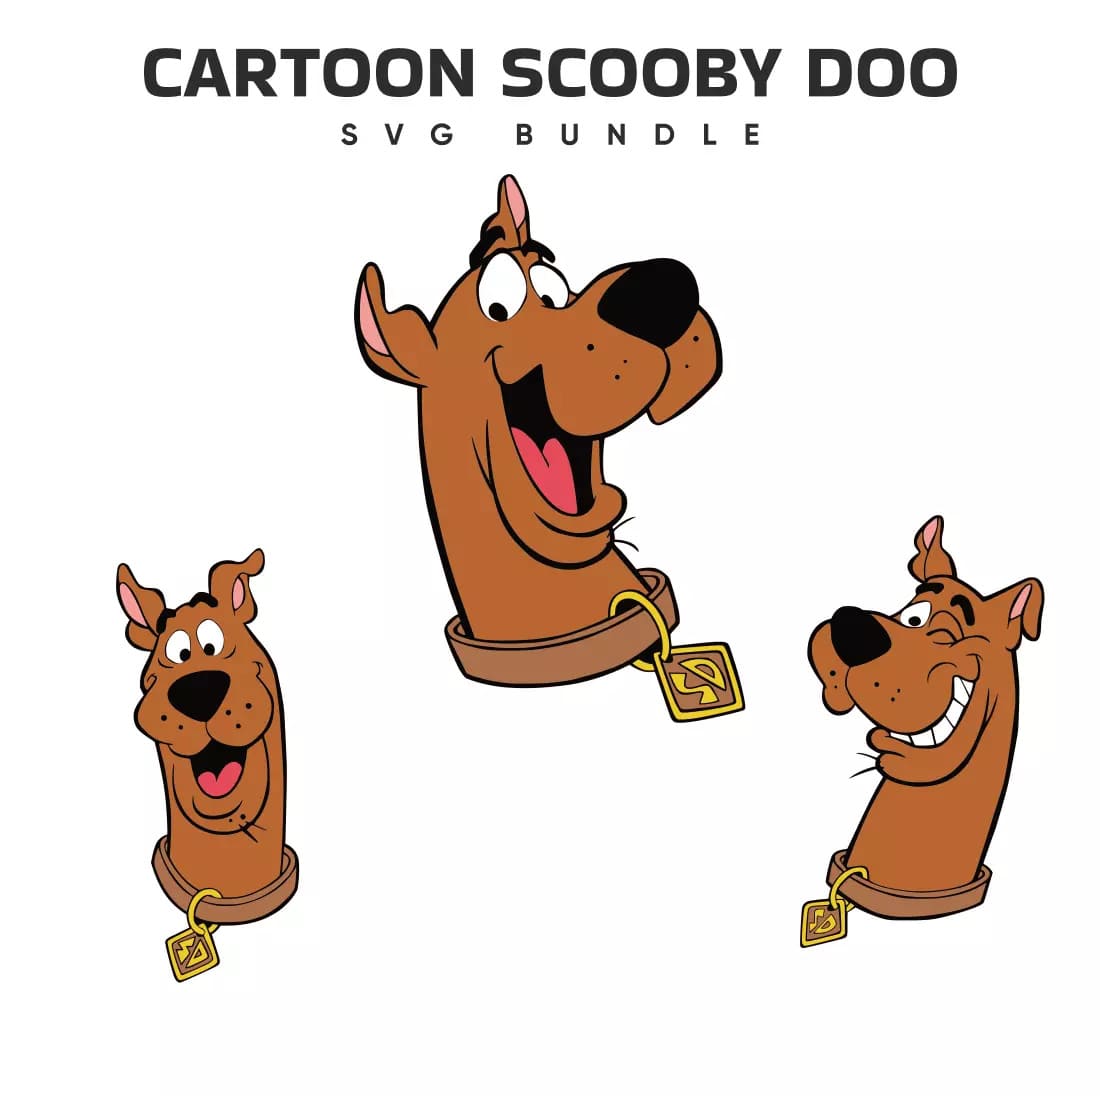 Cartoon Scooby Doo SVG Bundle Preview.